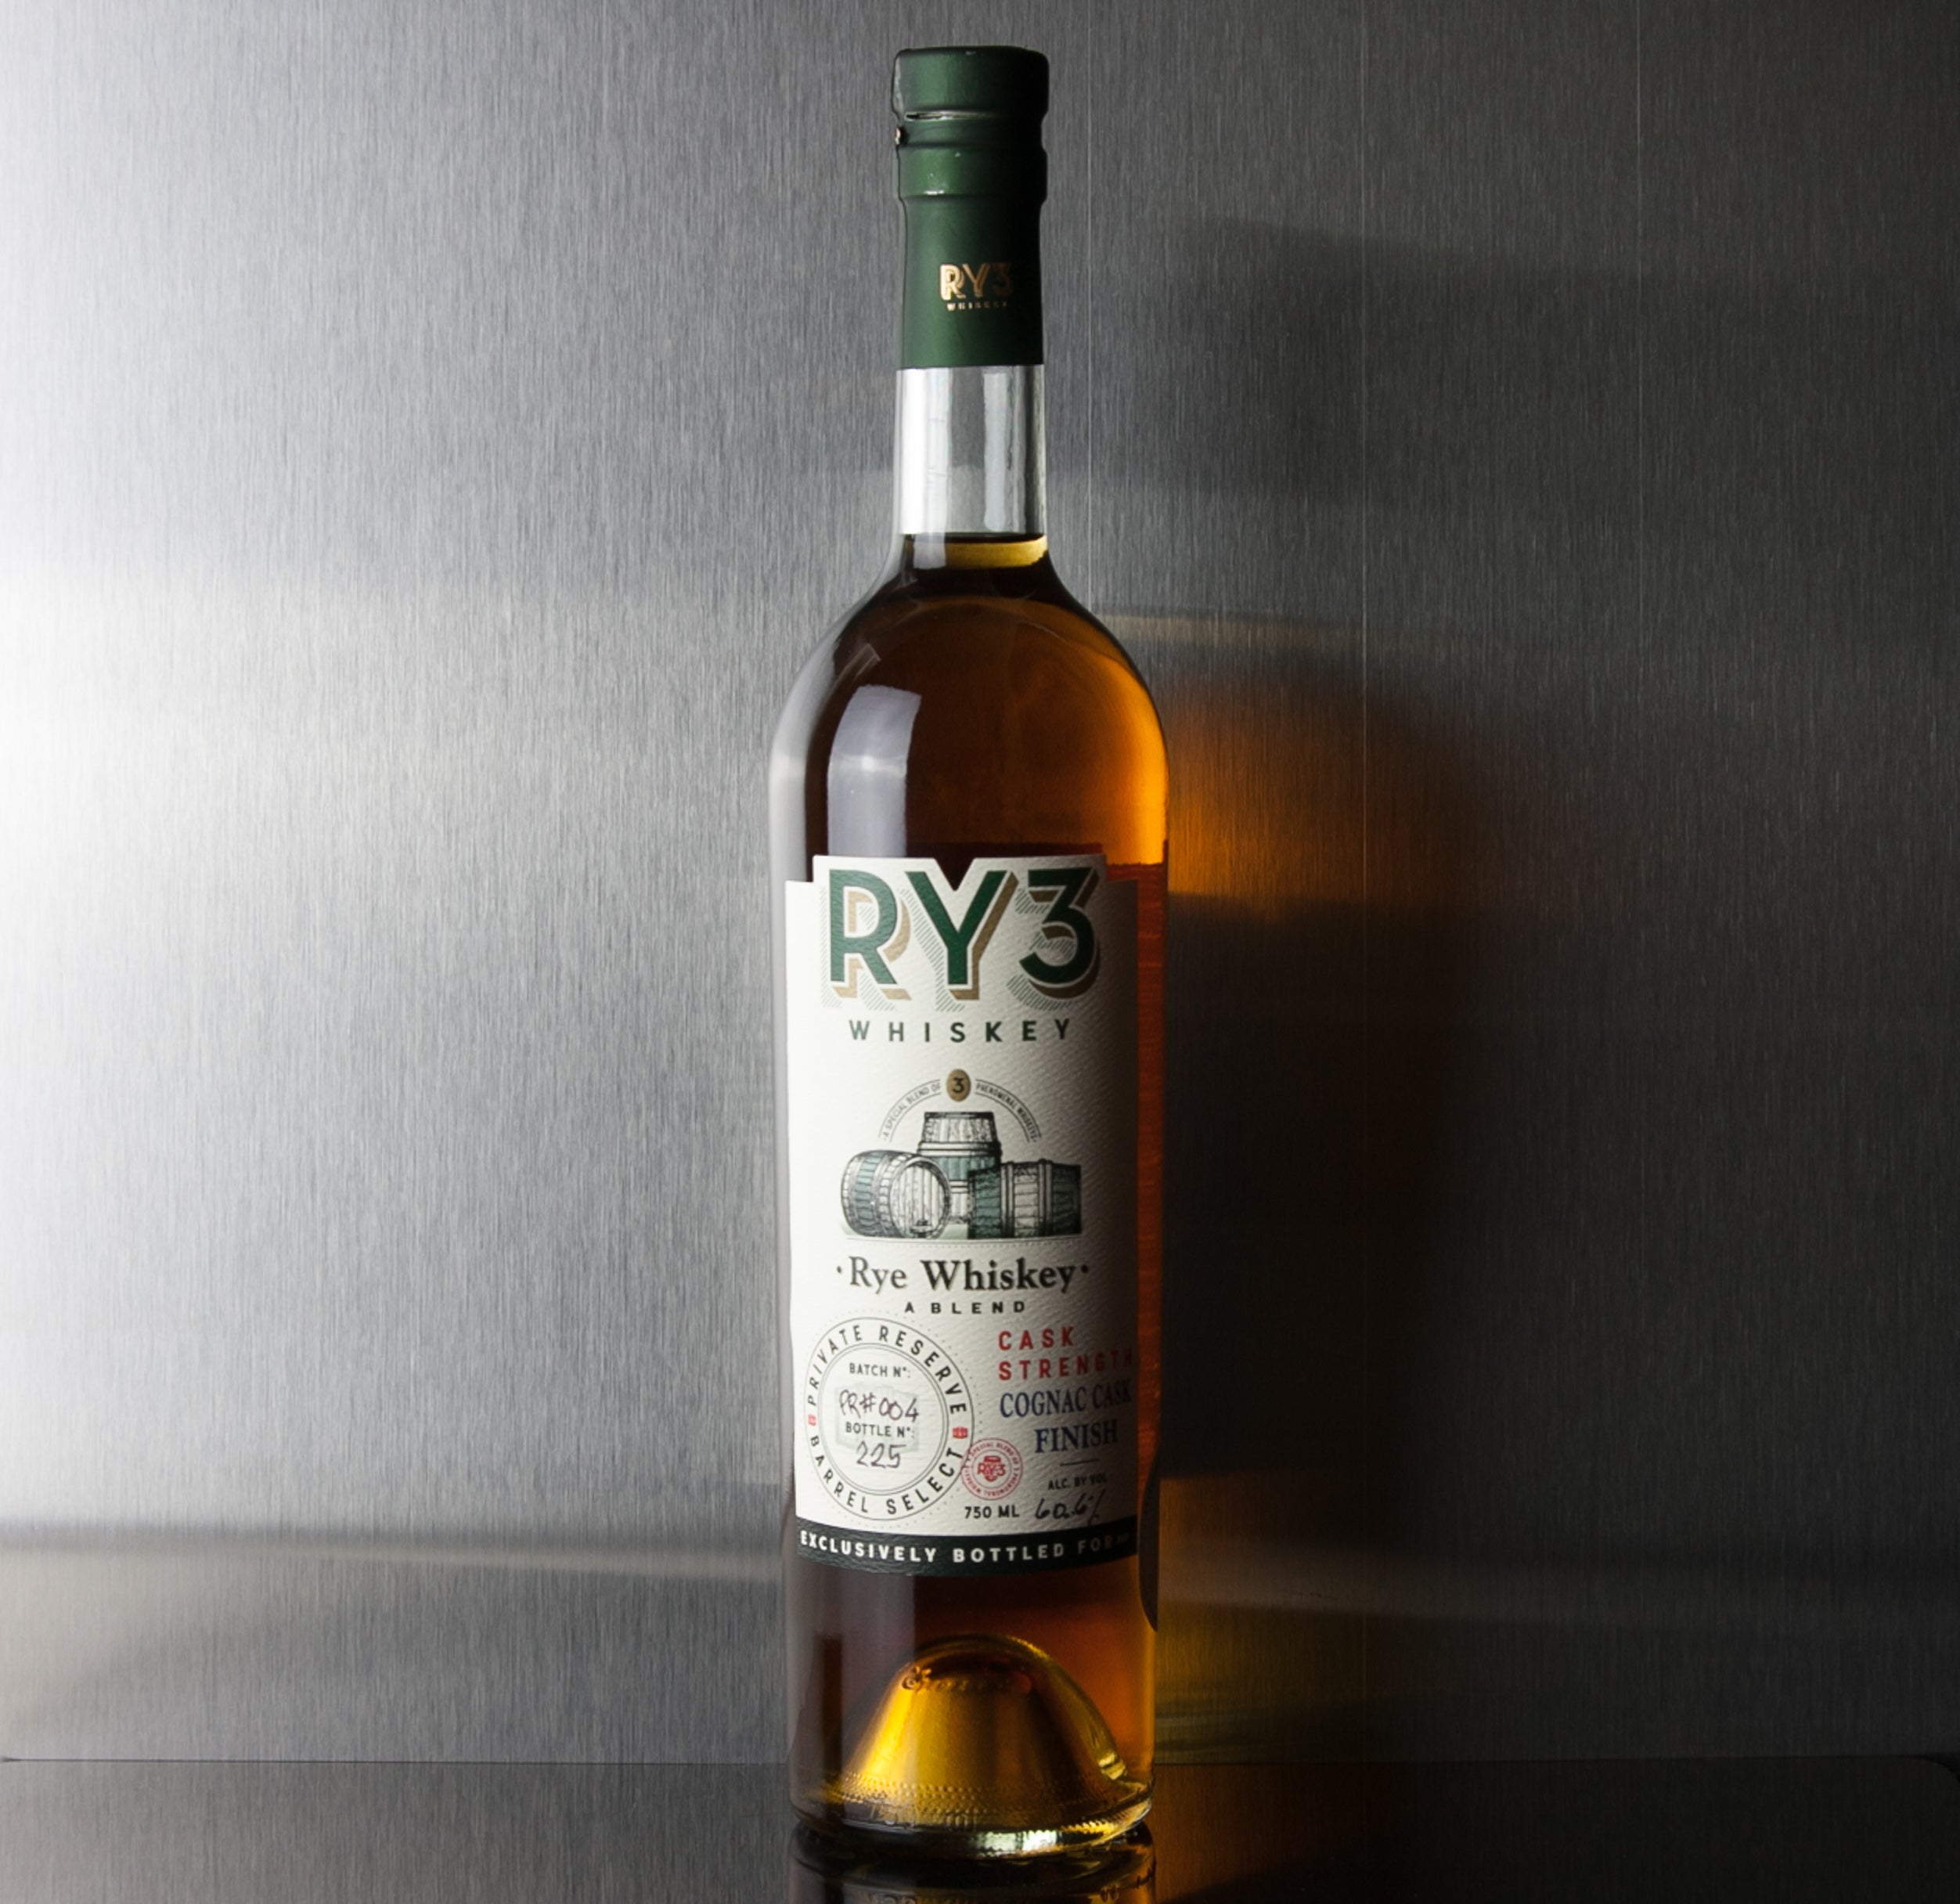 RY3 Cask Strength Cognac Cask Finish Rye Whiskey